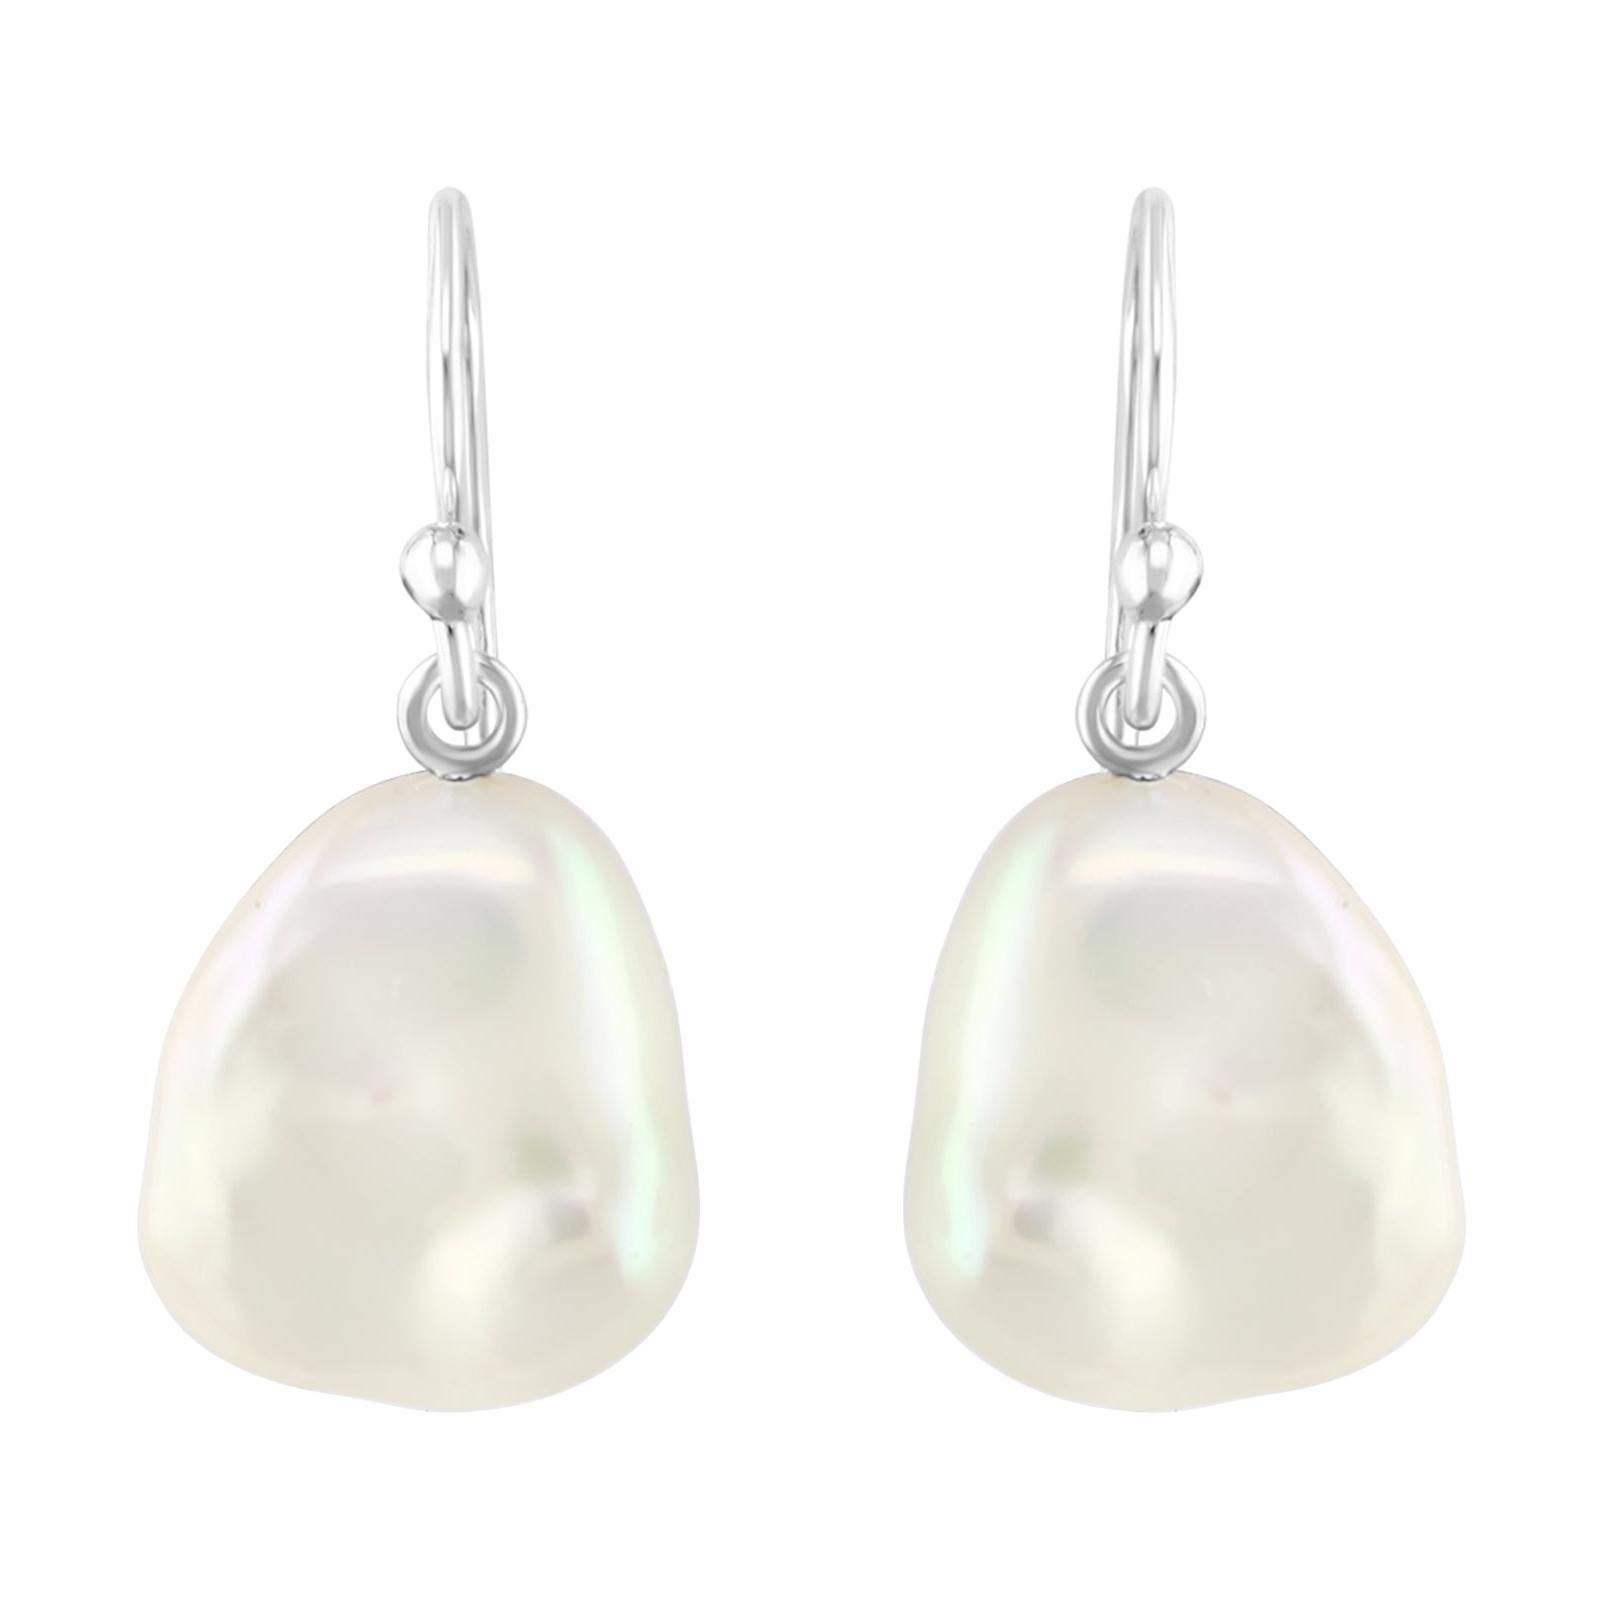 Freshwater Keshi pearl earrings 925 sterling silver hooks 